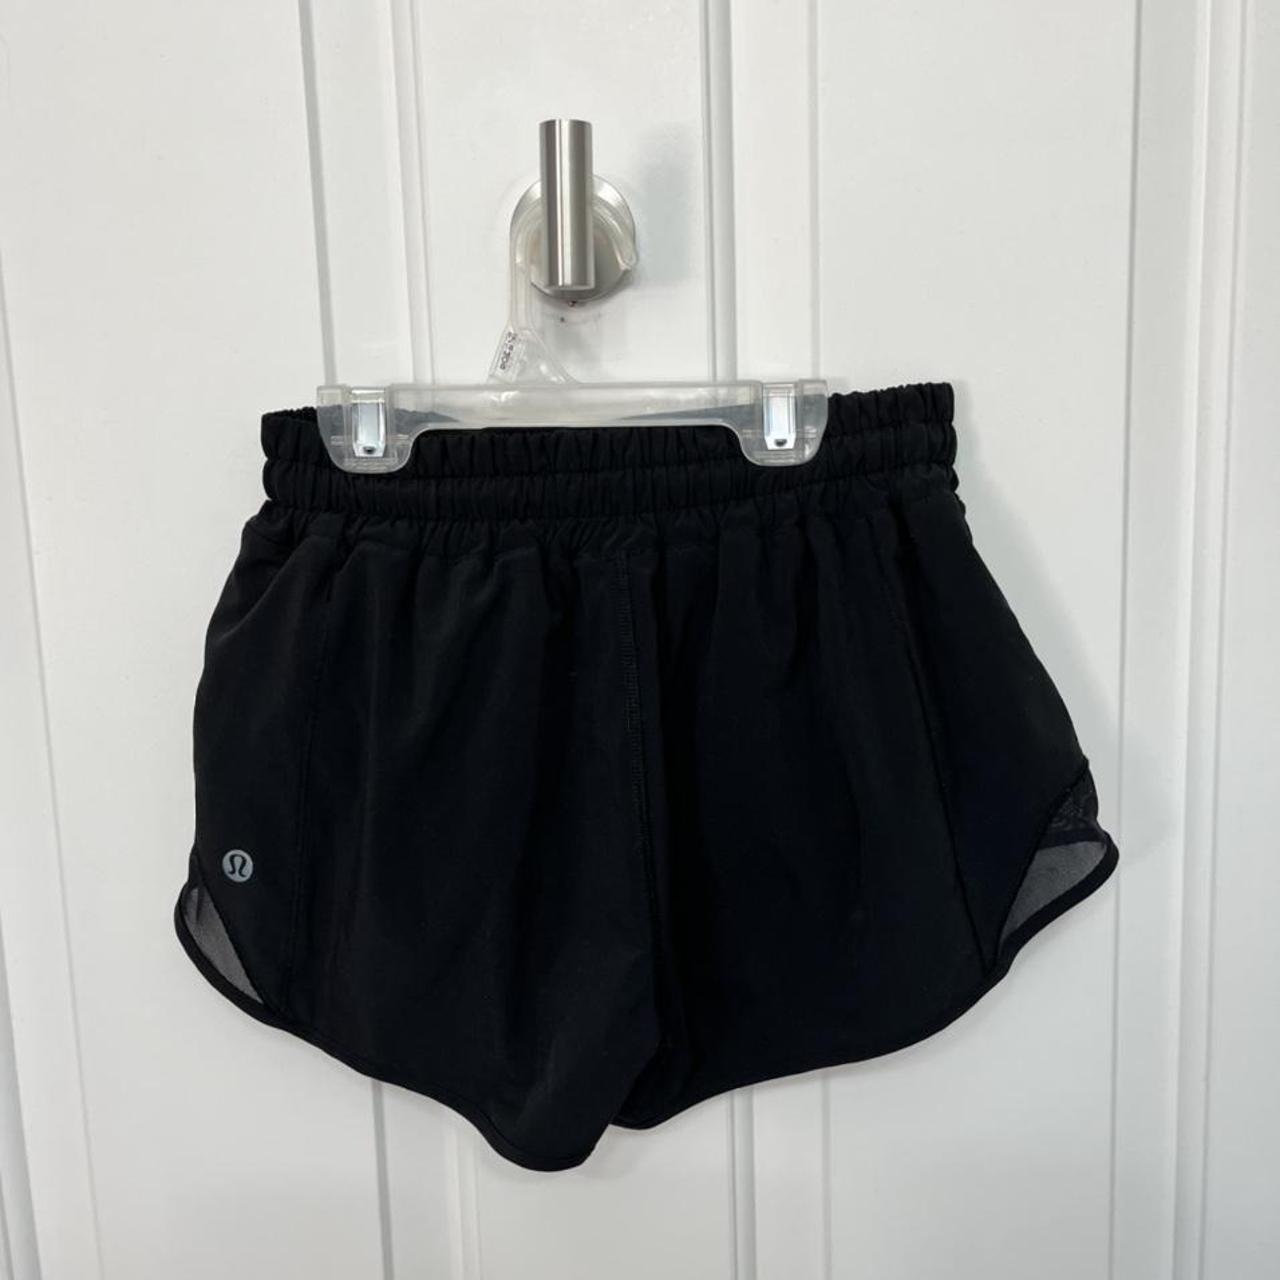 Lululemon hotty hot shorts 2.5 in low rise, black